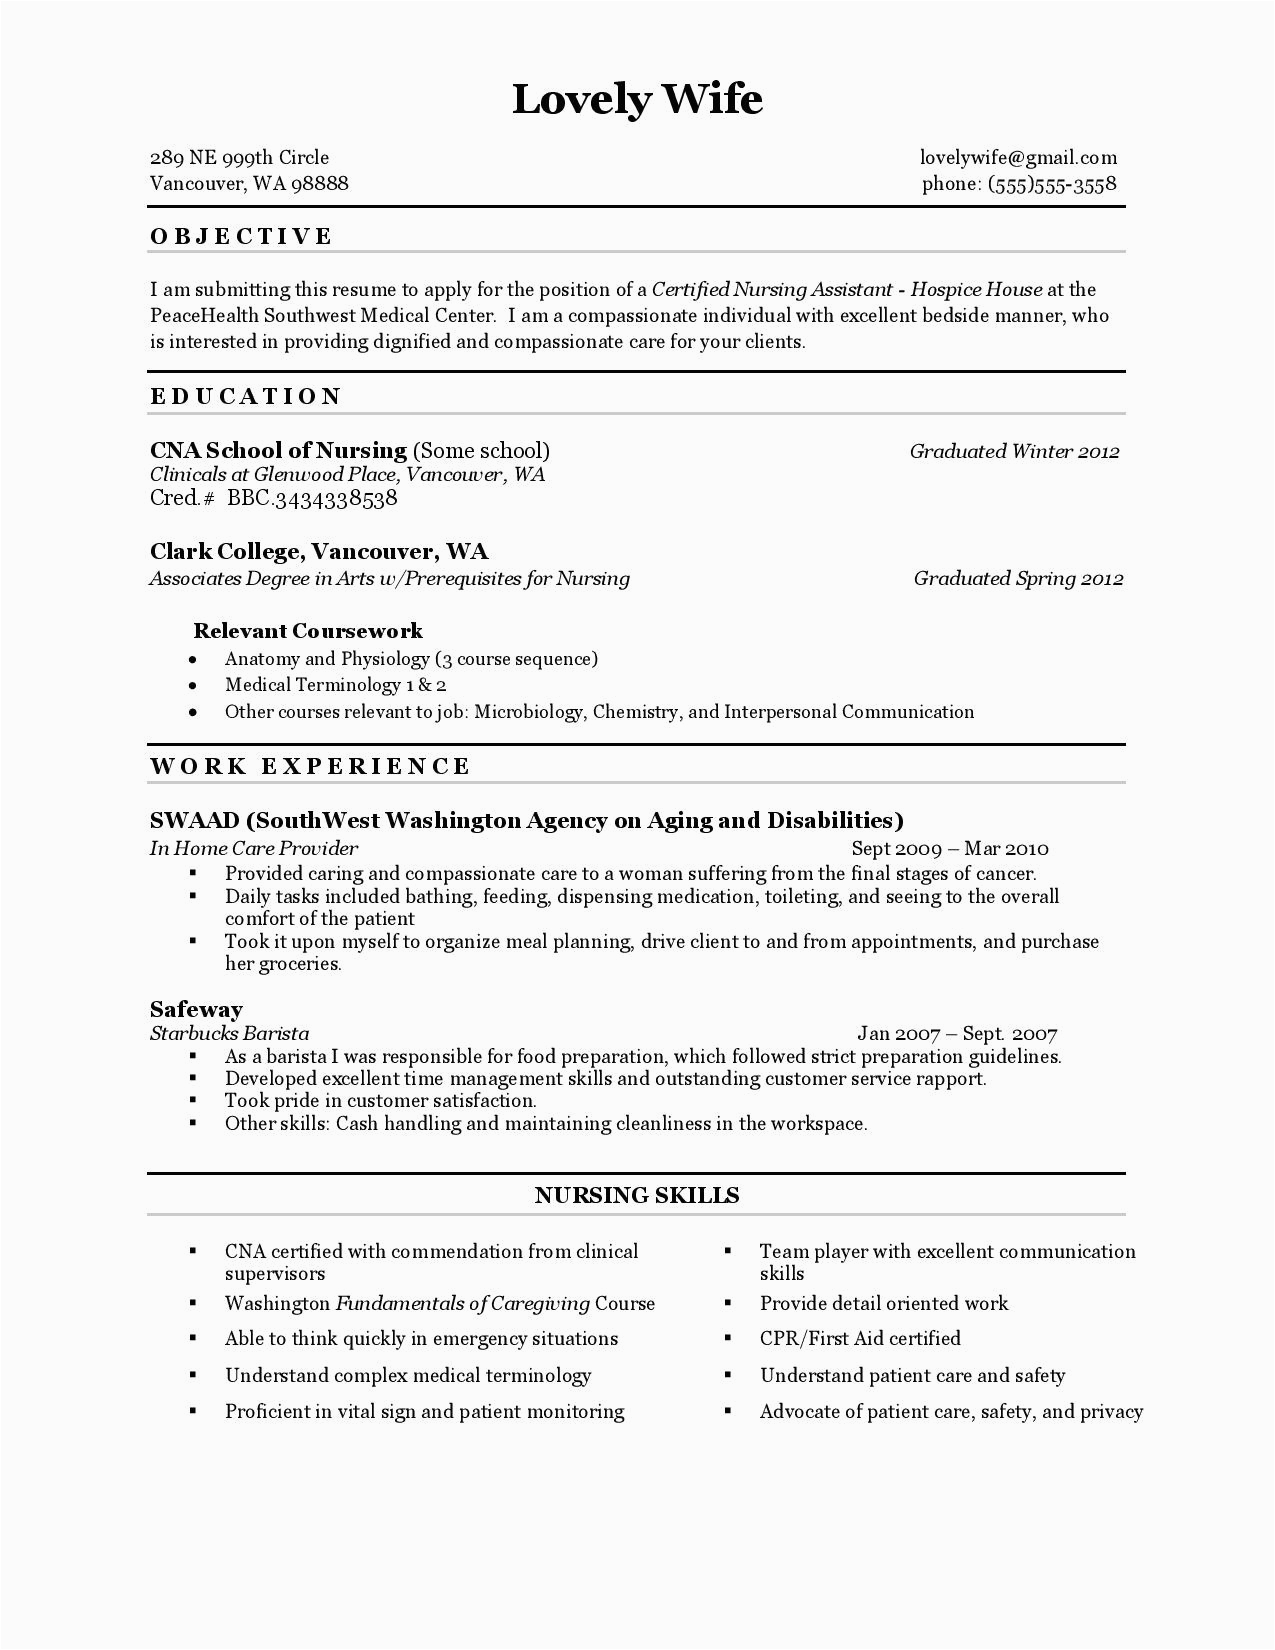 Sample Resume Cna No Previous Experience 12 13 List Of Cna Skills for Resume Loginnelkriver